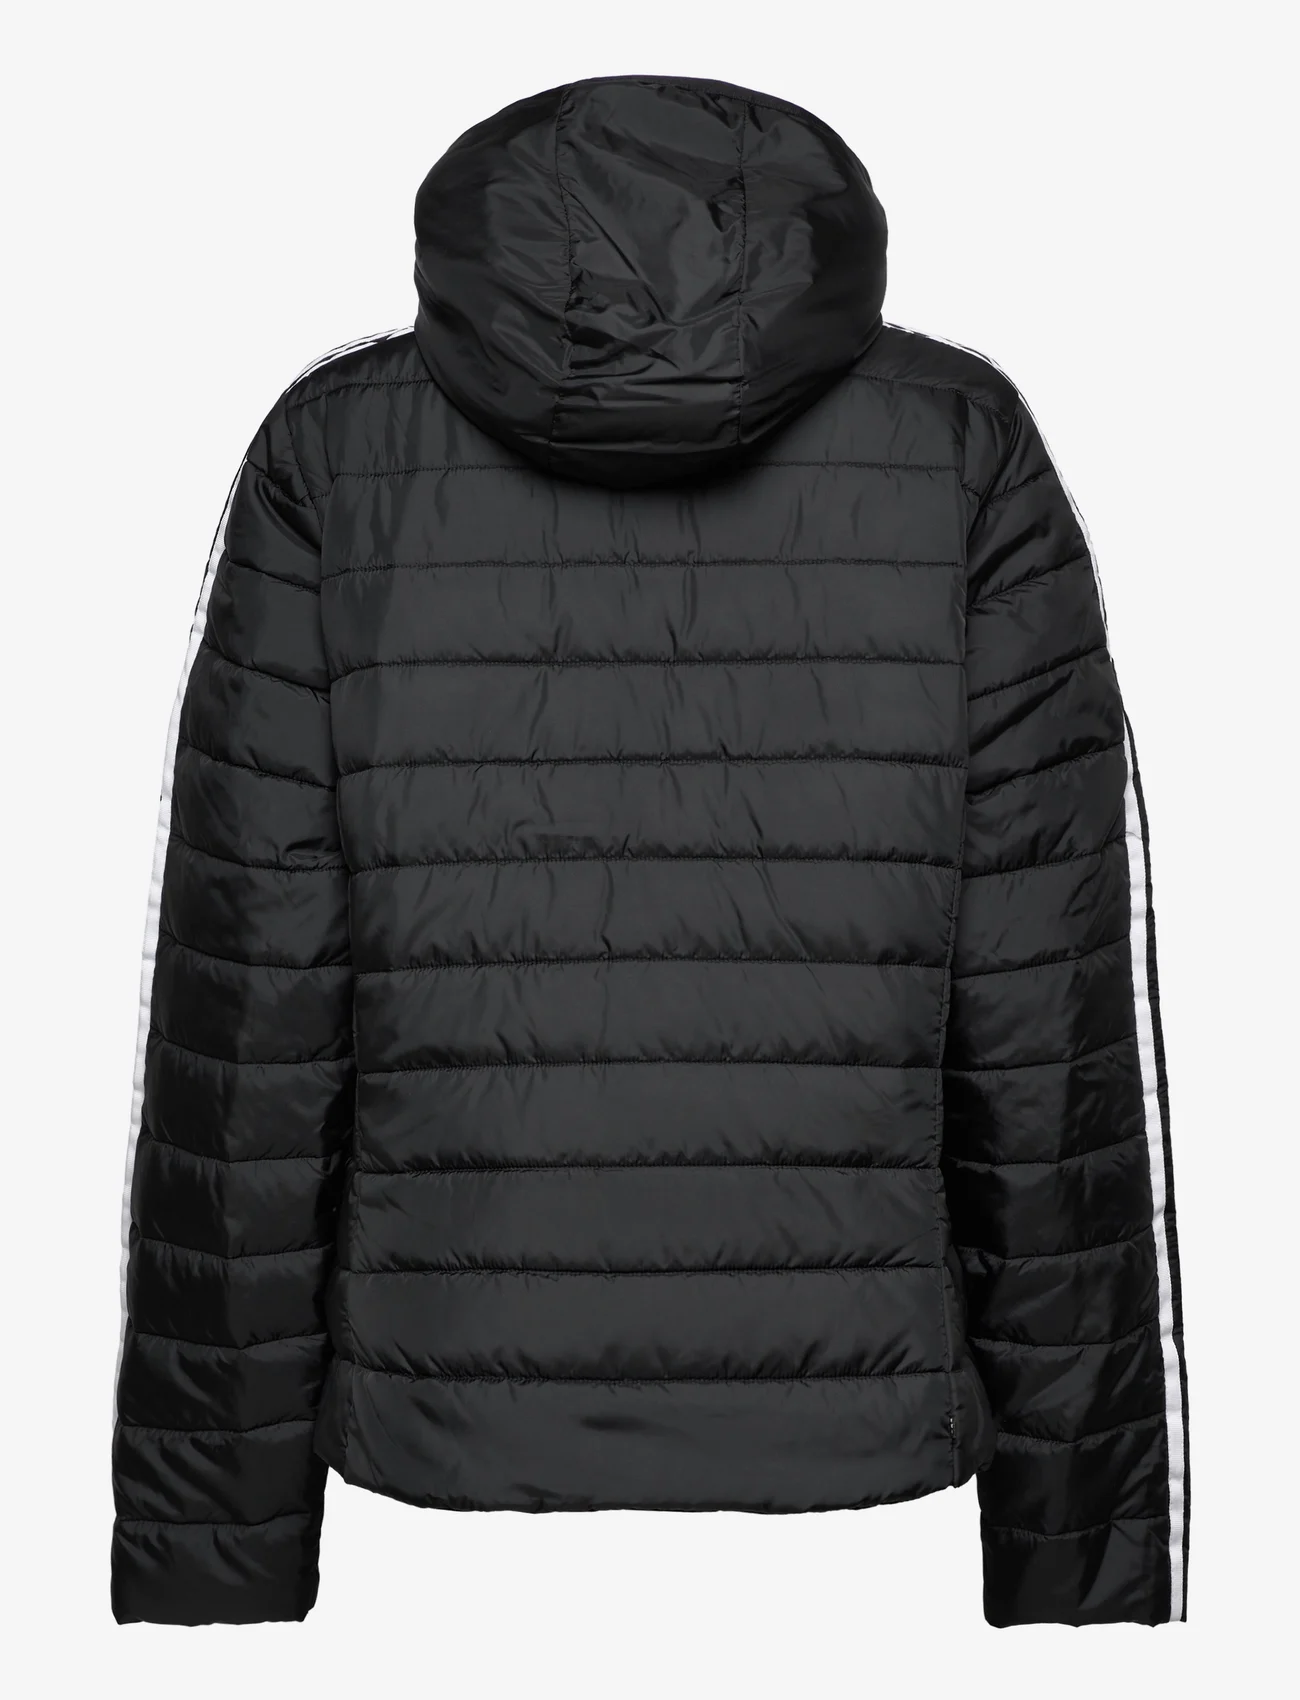 adidas Originals - Hooded Premium Slim Jacket (Plus Size) - winterjacken - black - 1